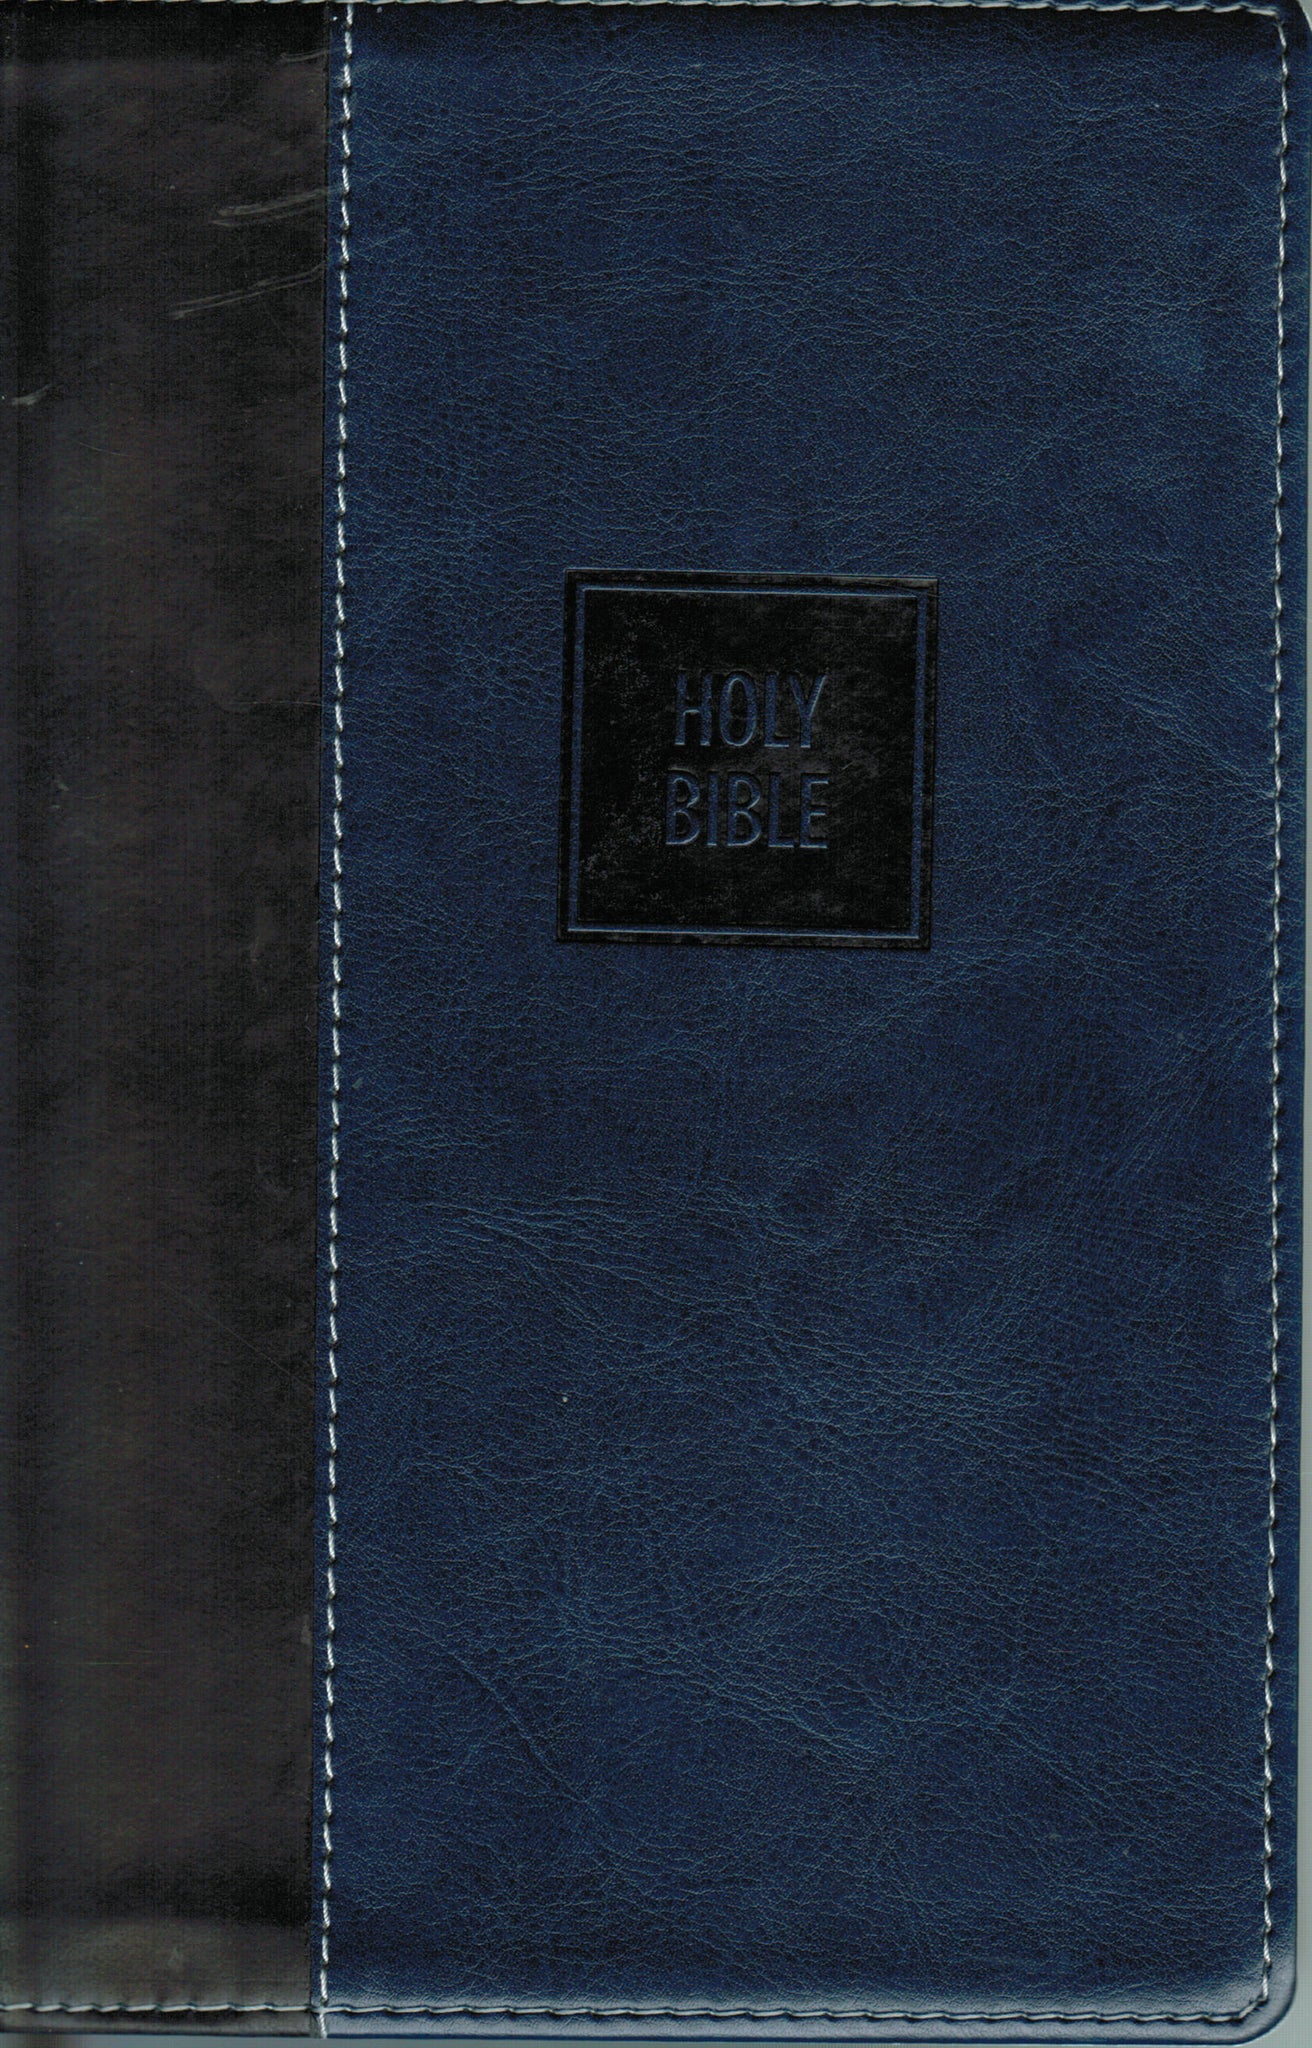 NKJV Bible - Thomas Nelson Deluxe Gift (Imitation)